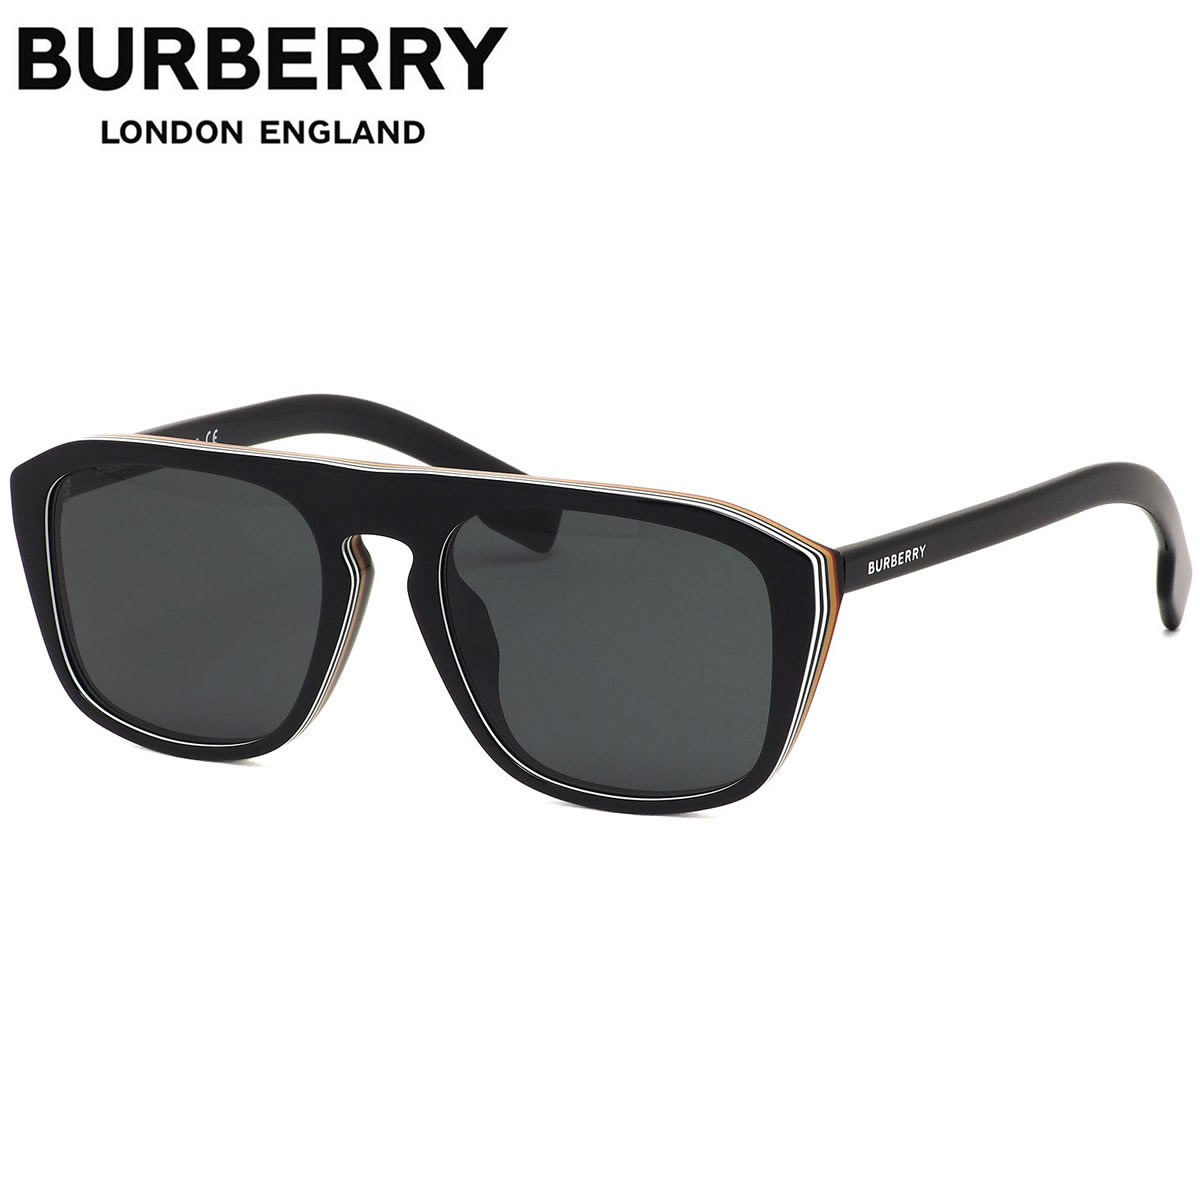 who makes burberry sunglasses